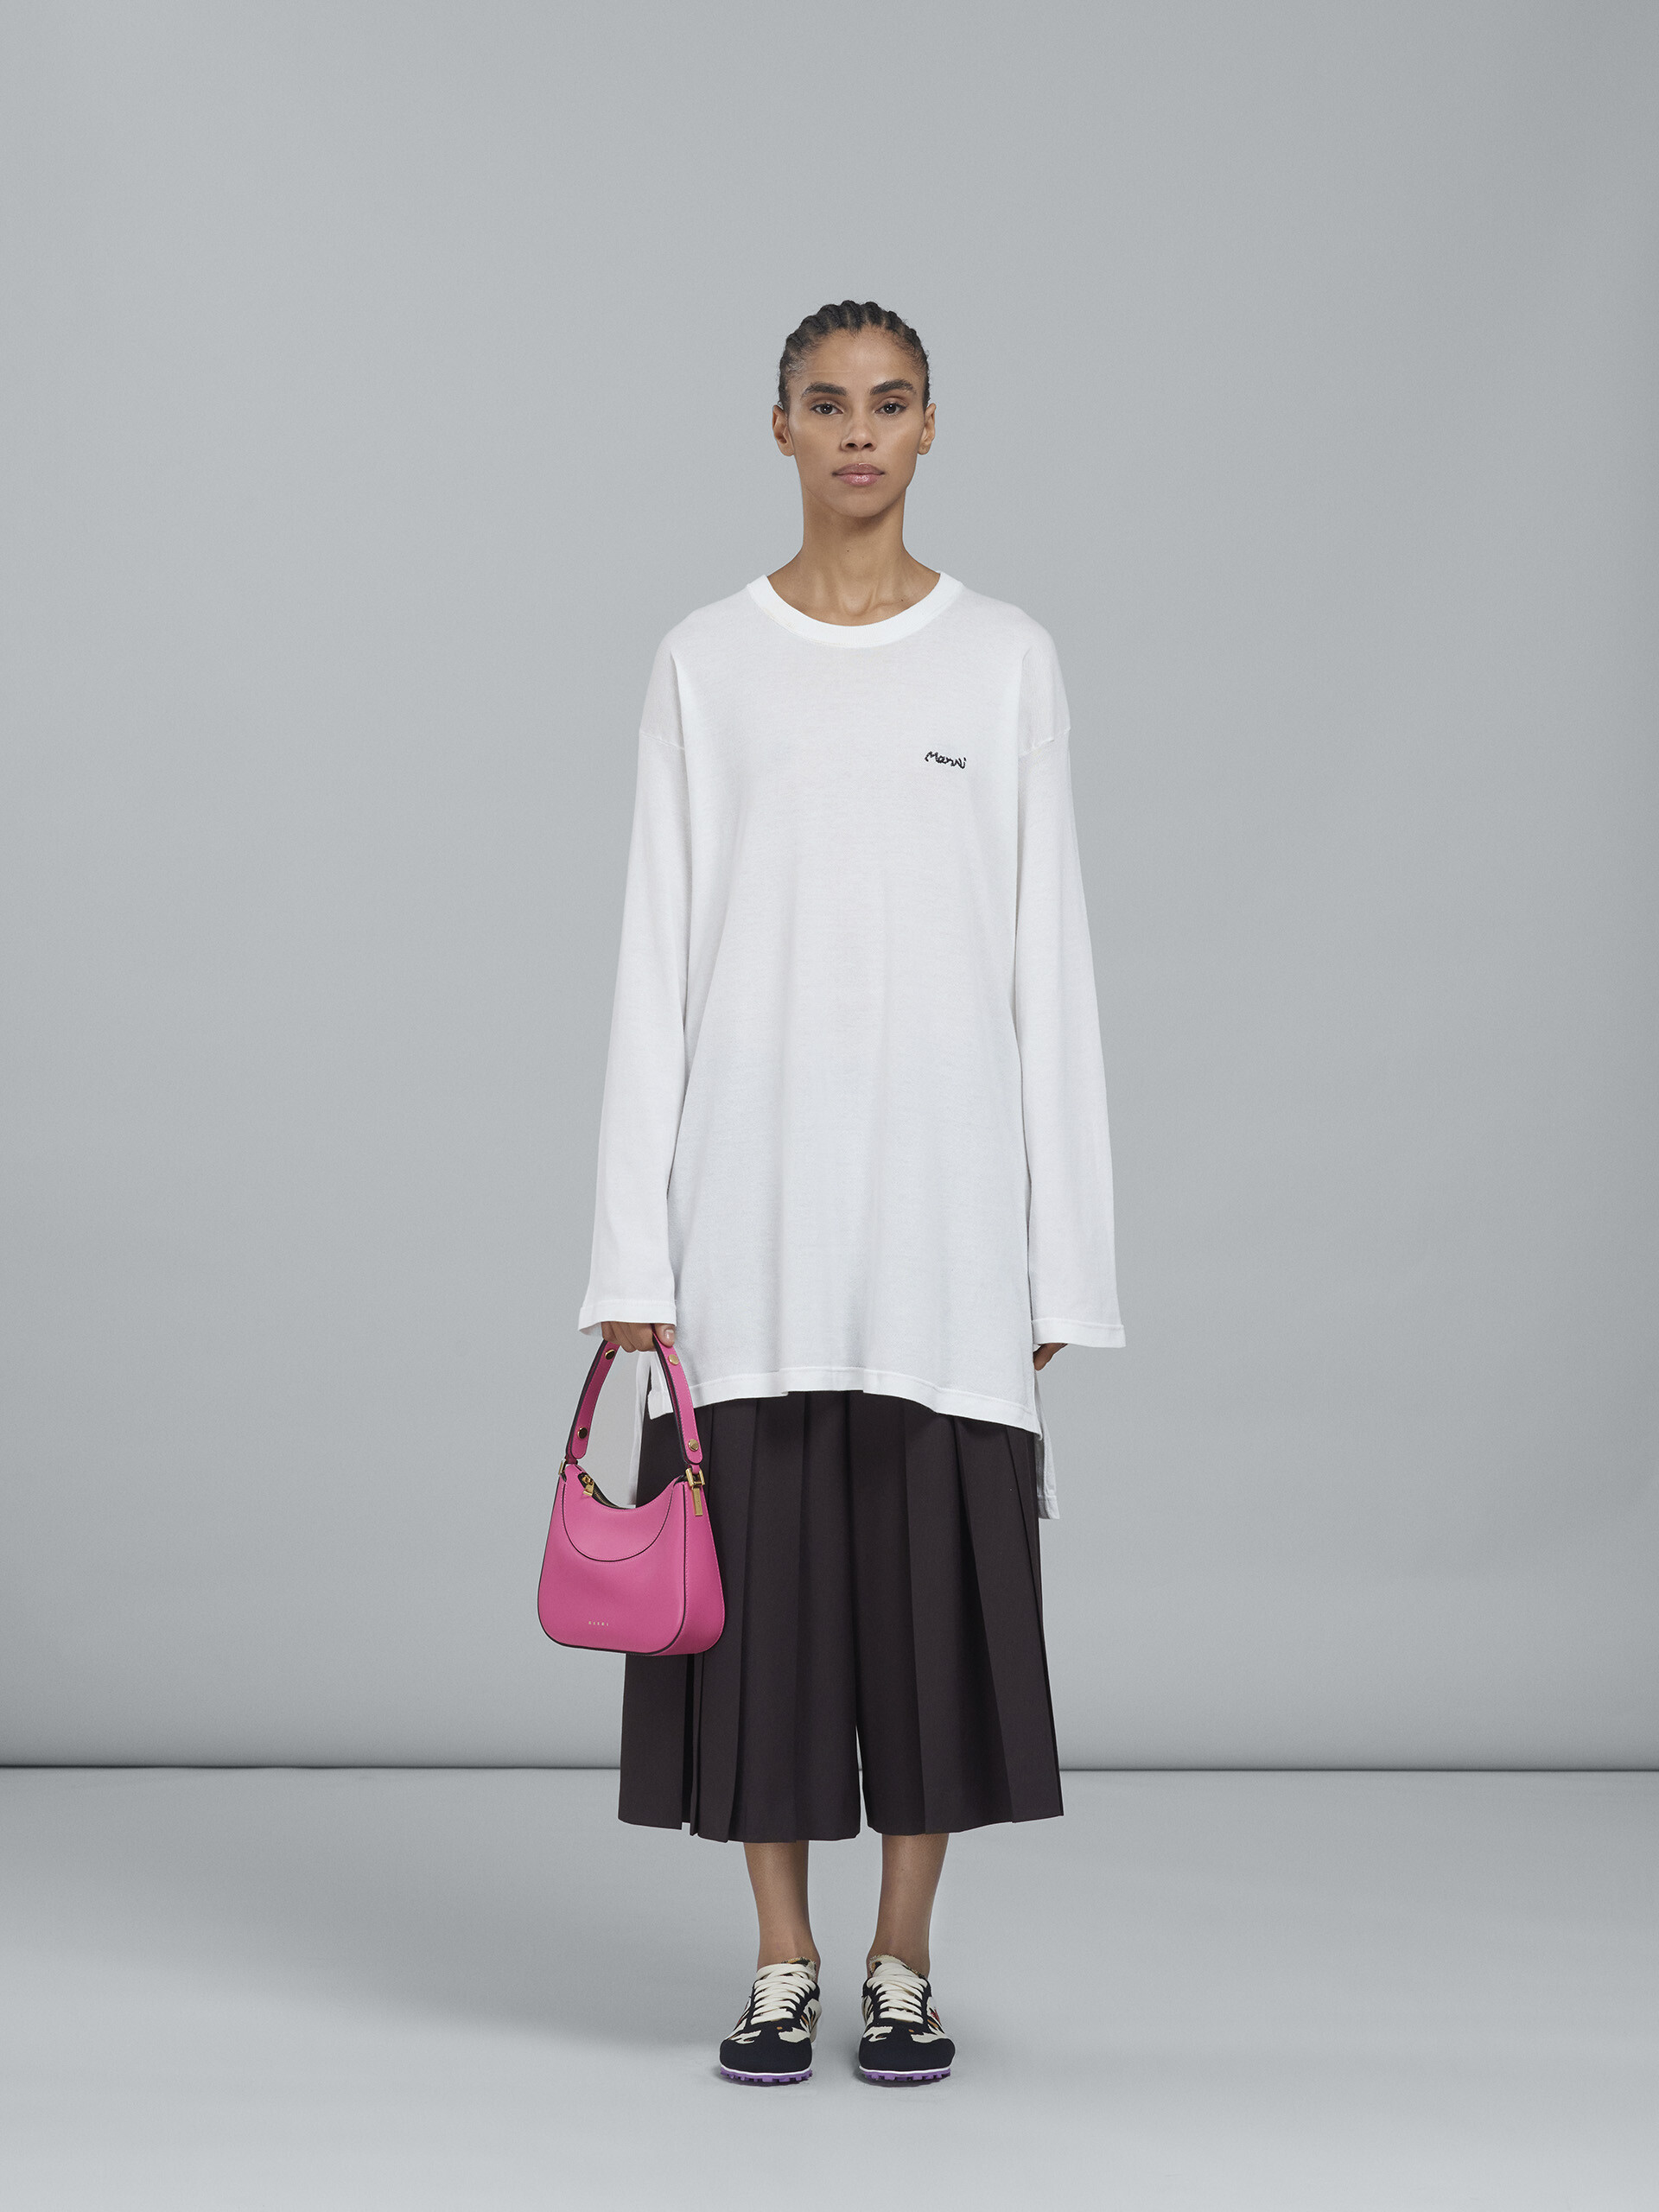 Milano mini bag in pink leather - Handbag - Image 2